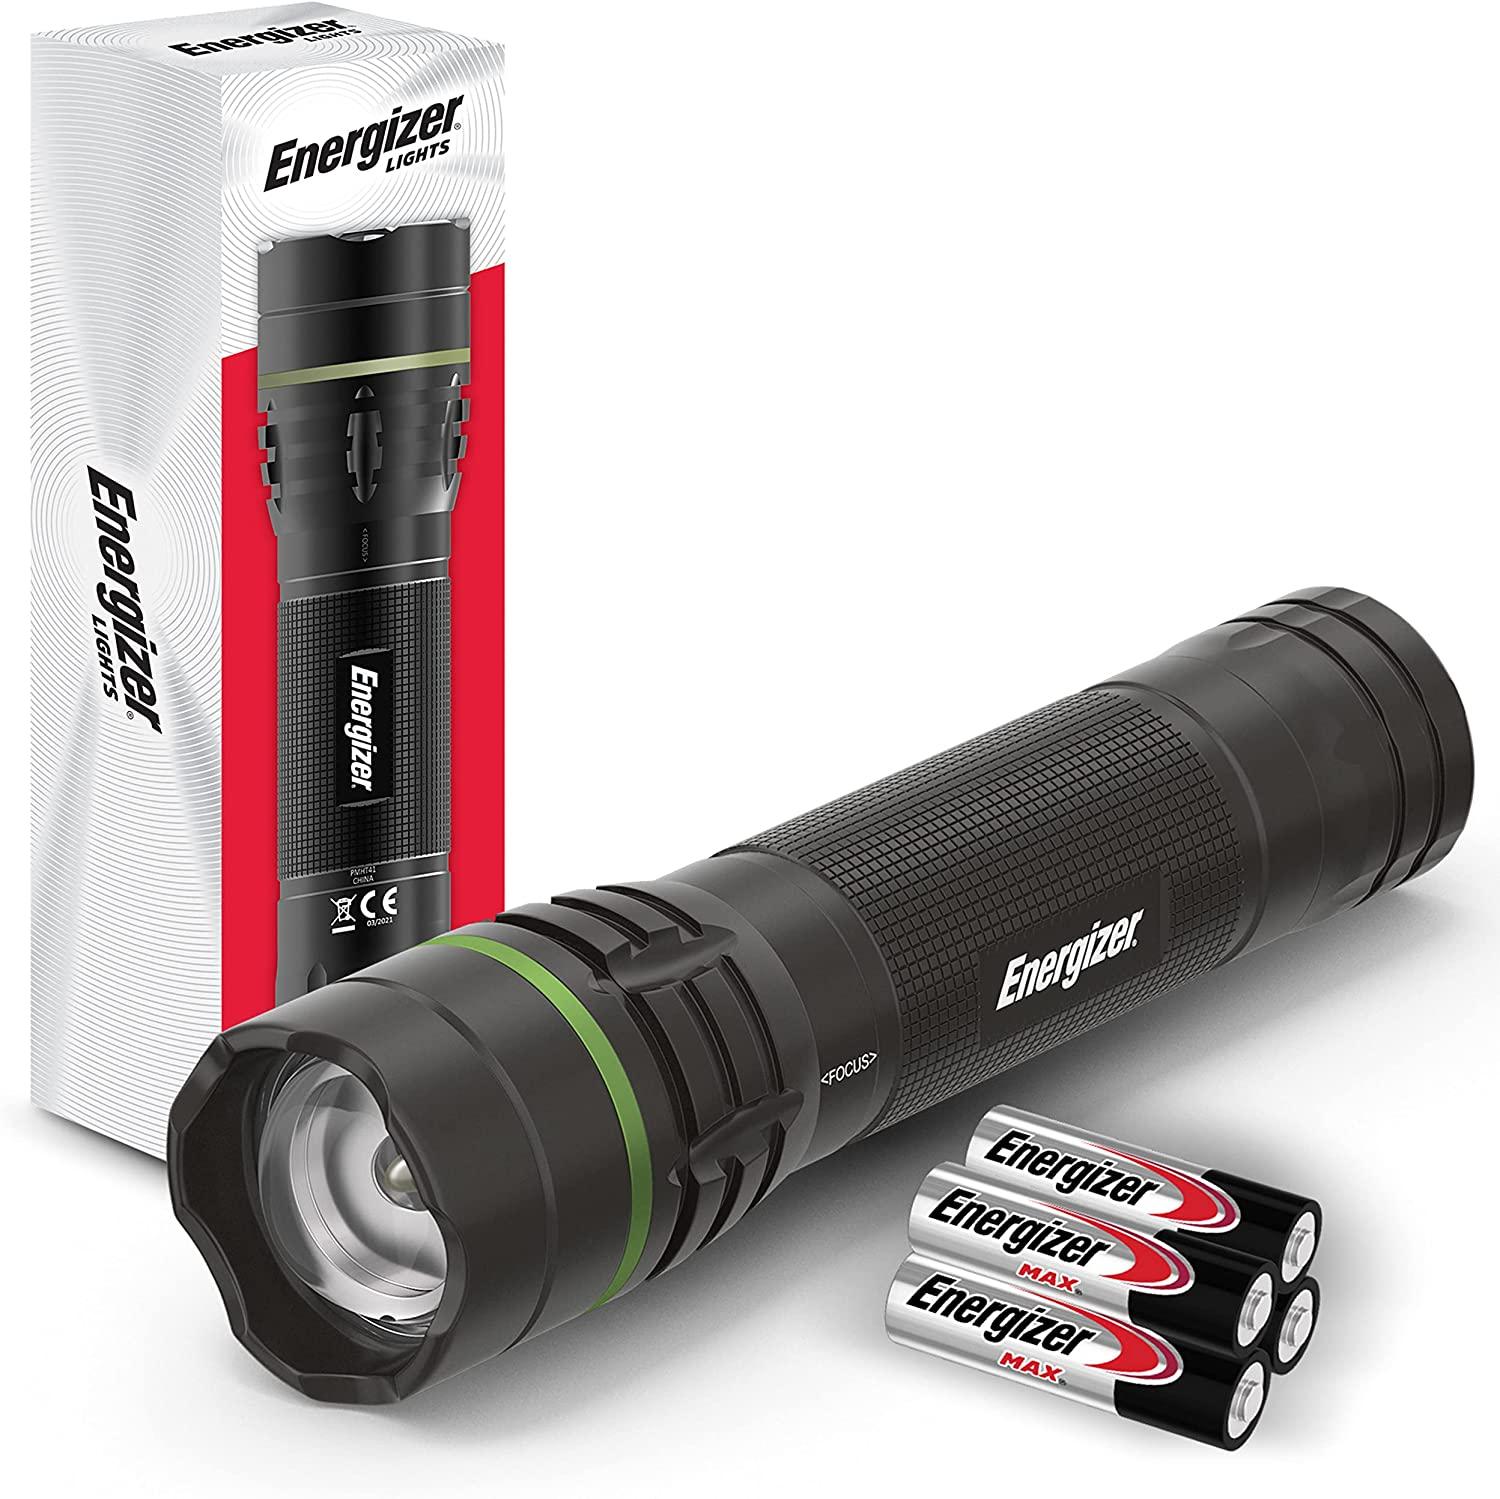 Energizer 950 High Lumen LED Tactical Flashlight for $8.50